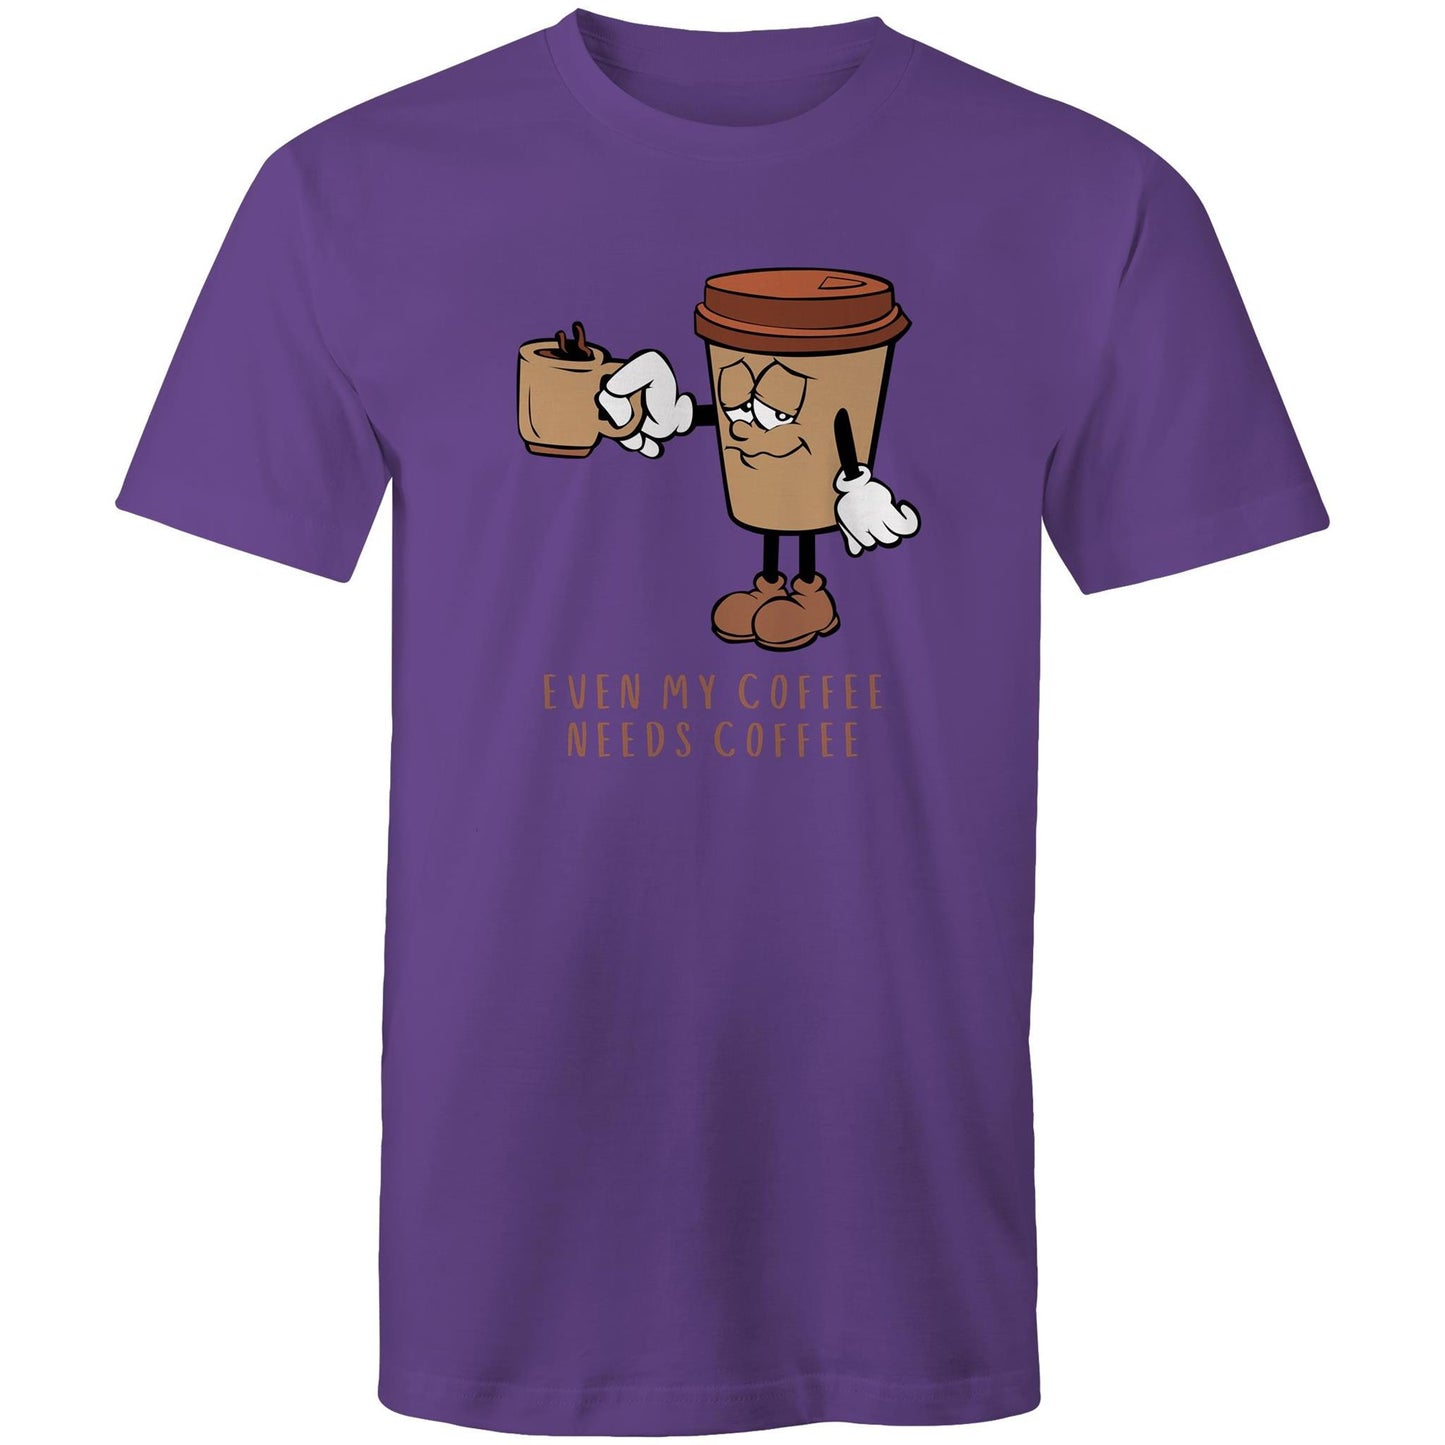 Even My Coffee Needs Coffee - Mens T-Shirt Purple Mens T-shirt Coffee